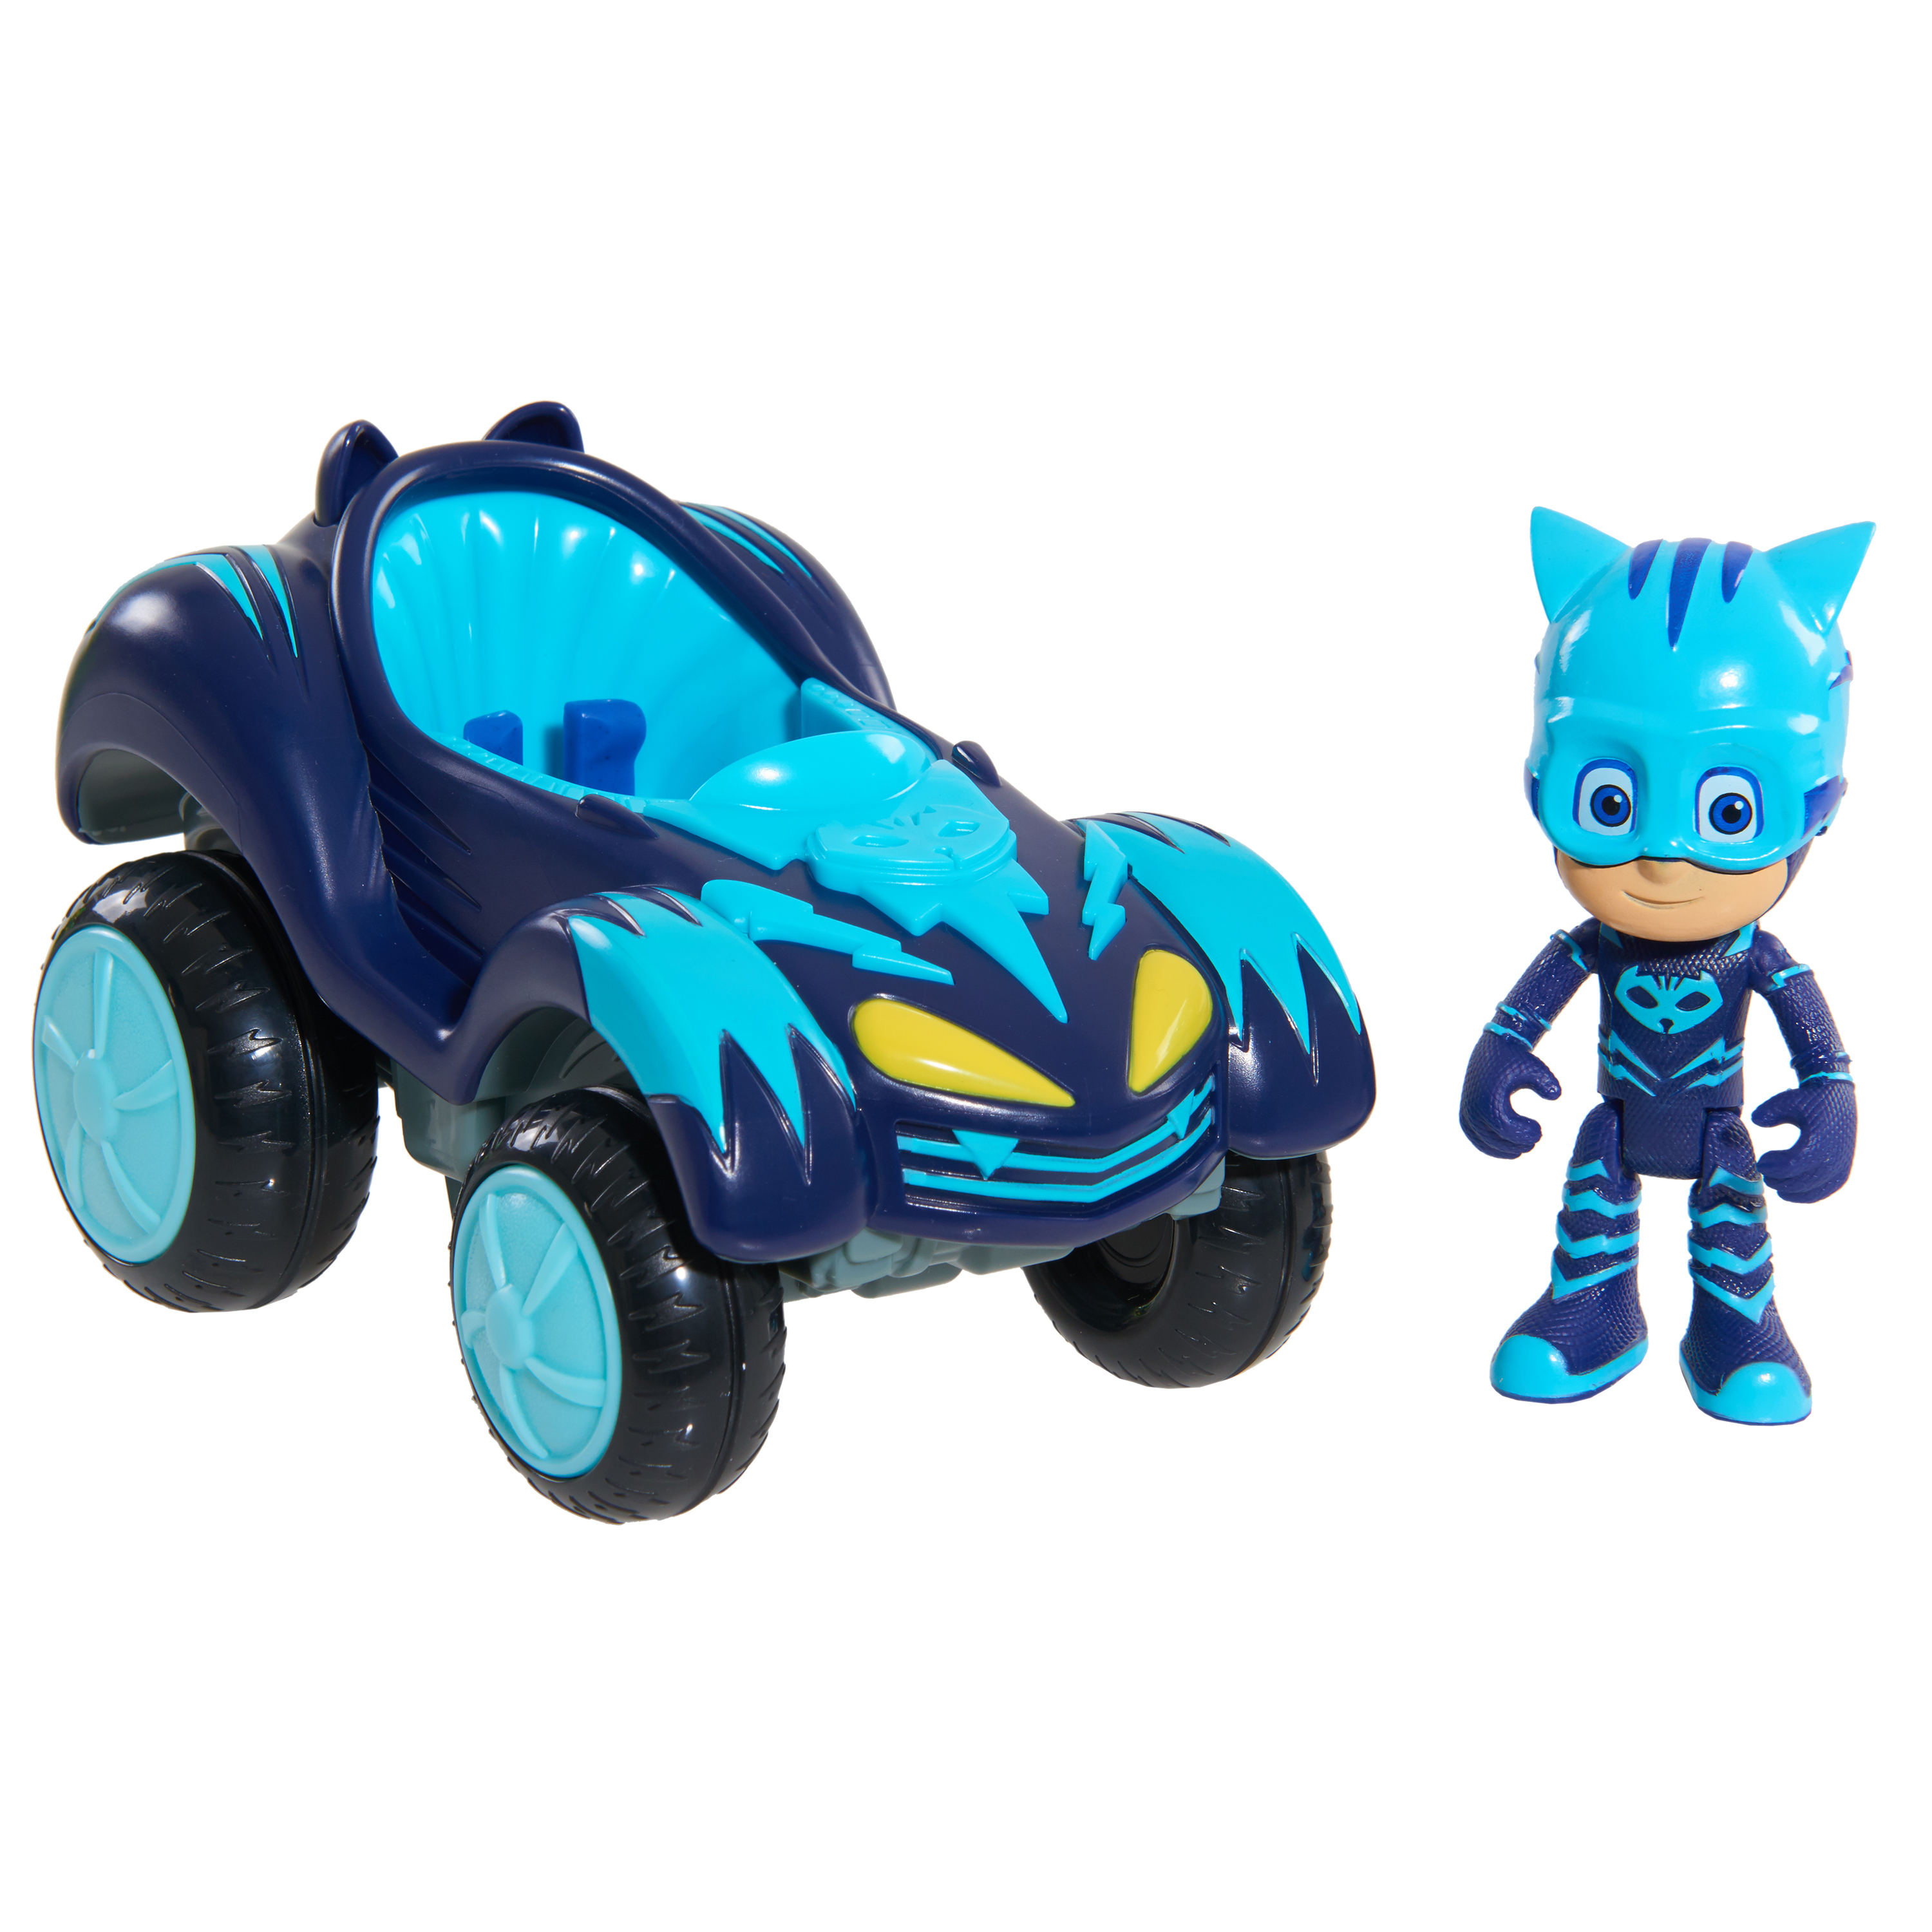 PJ Masks Hero Boost Vehicle - Cat-Car & Catboy Figure - image 1 of 3